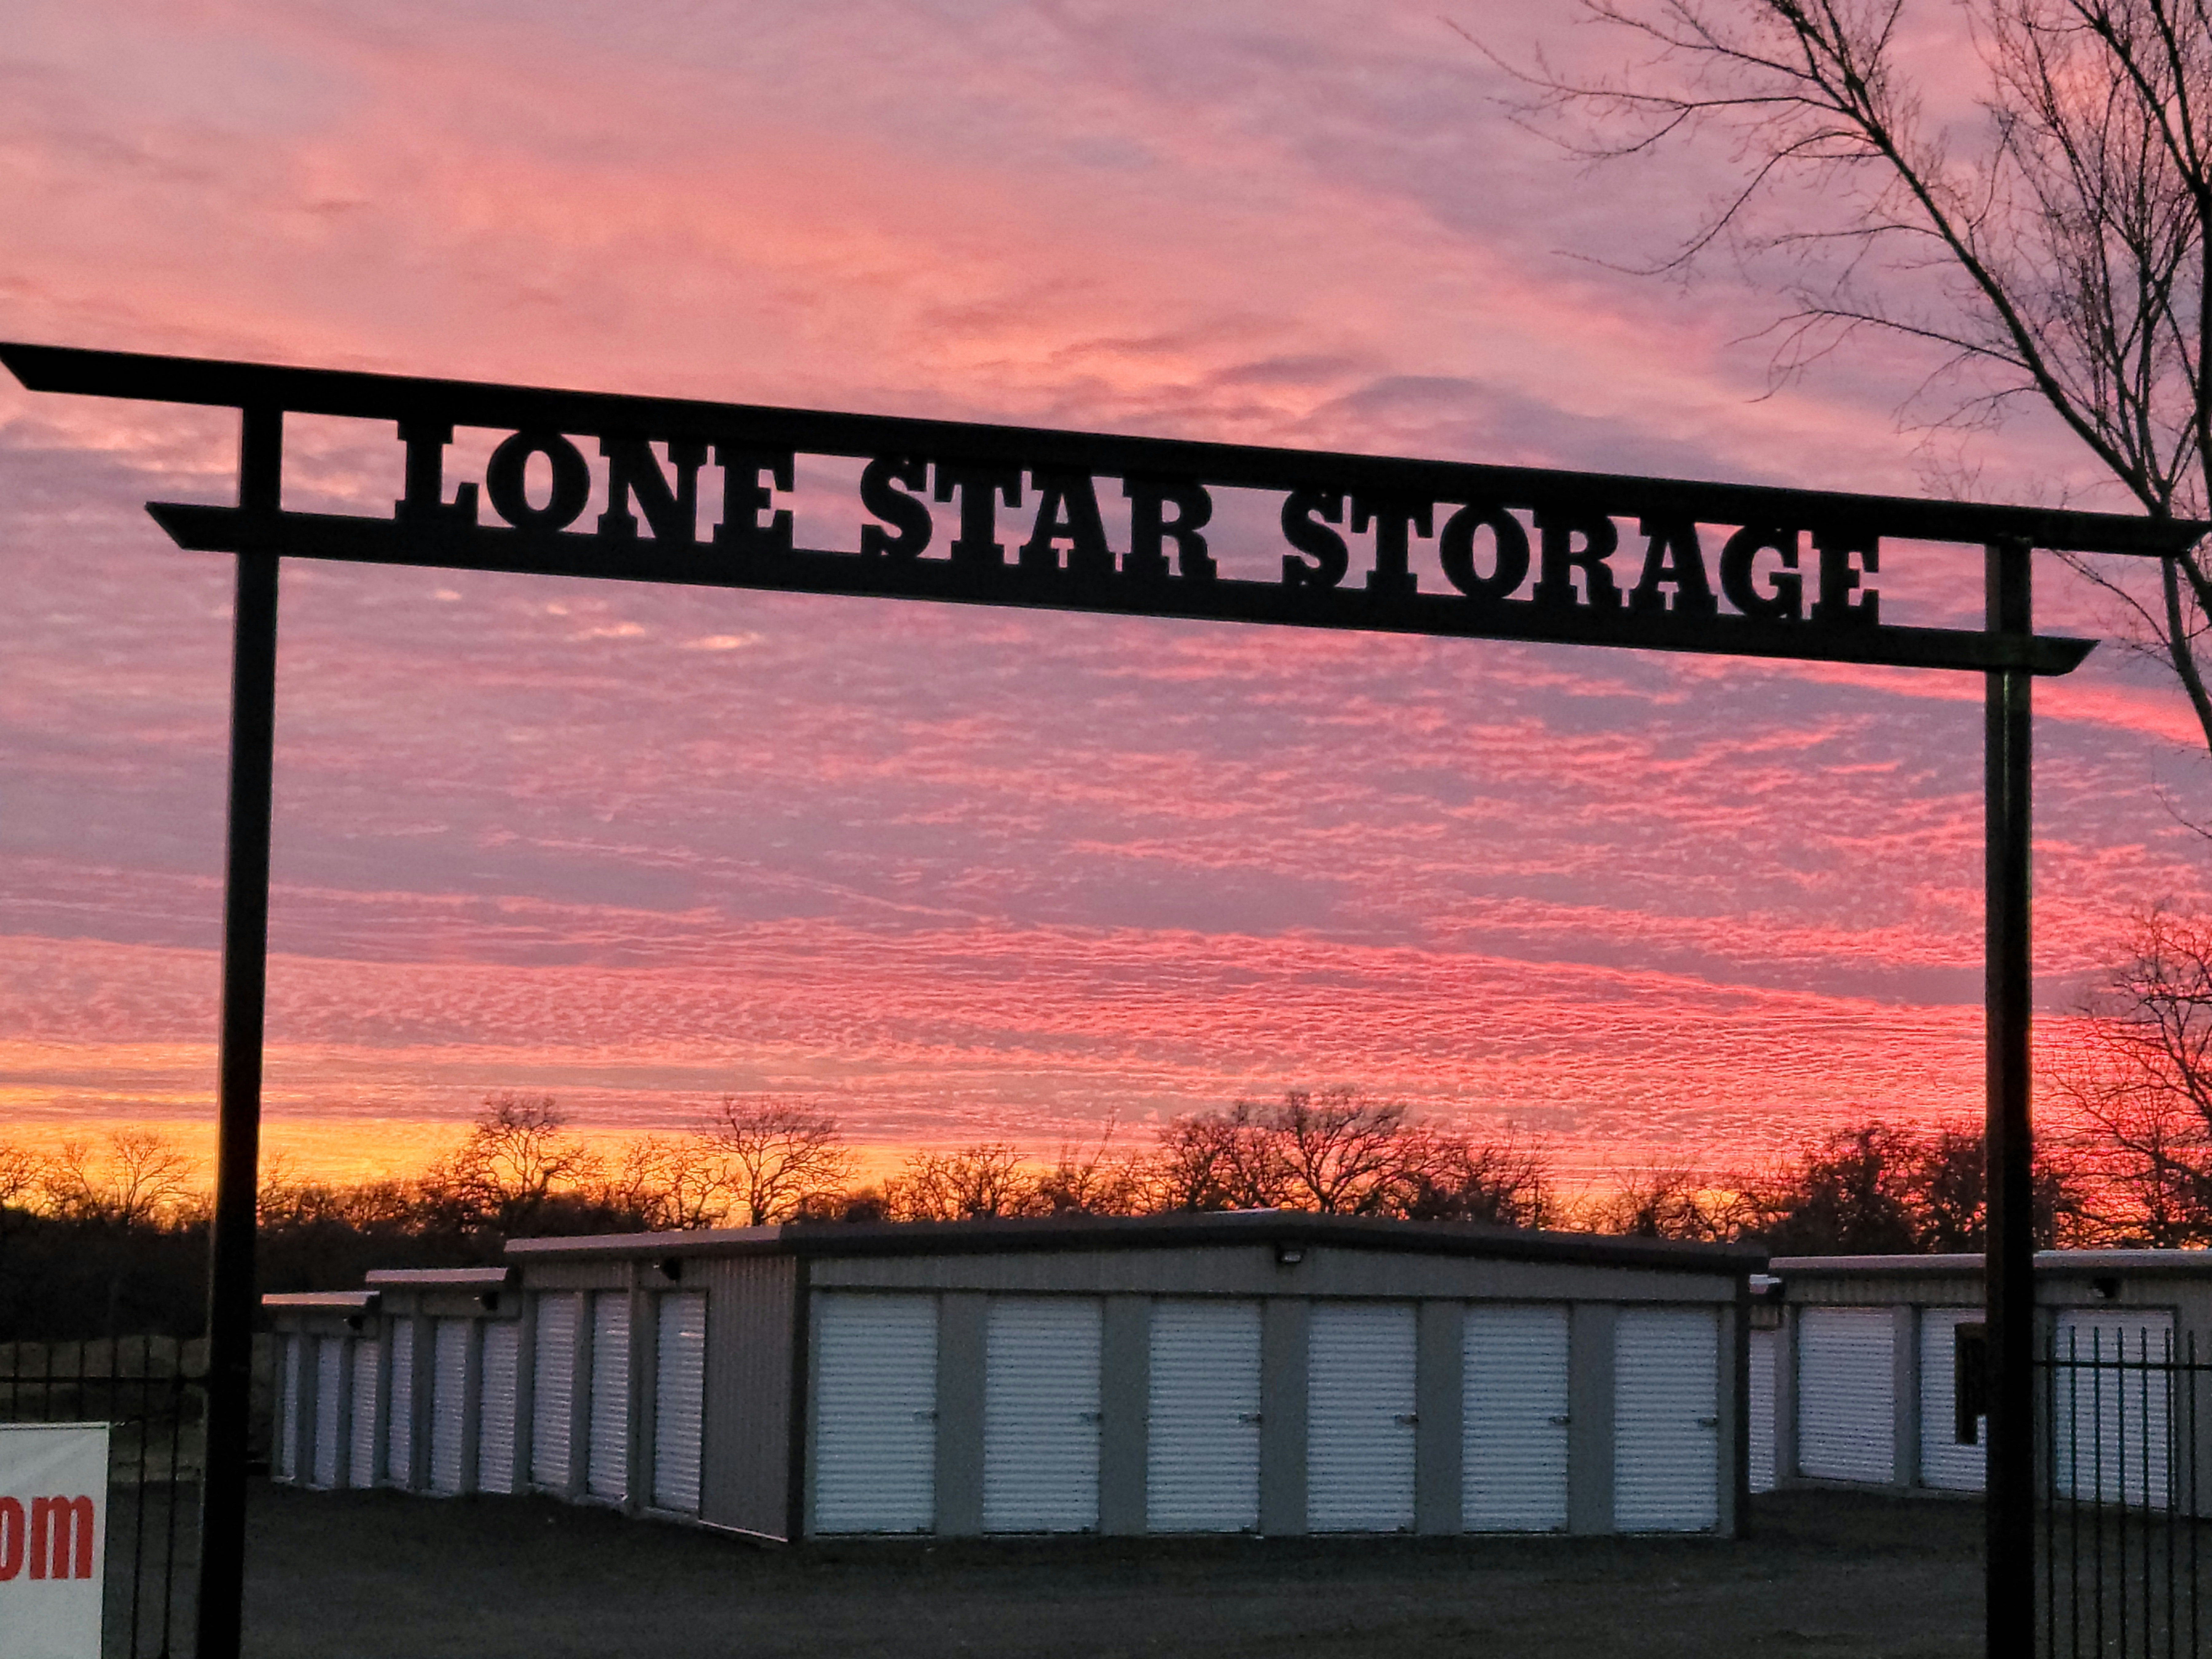 Lone Star Storage Sunset